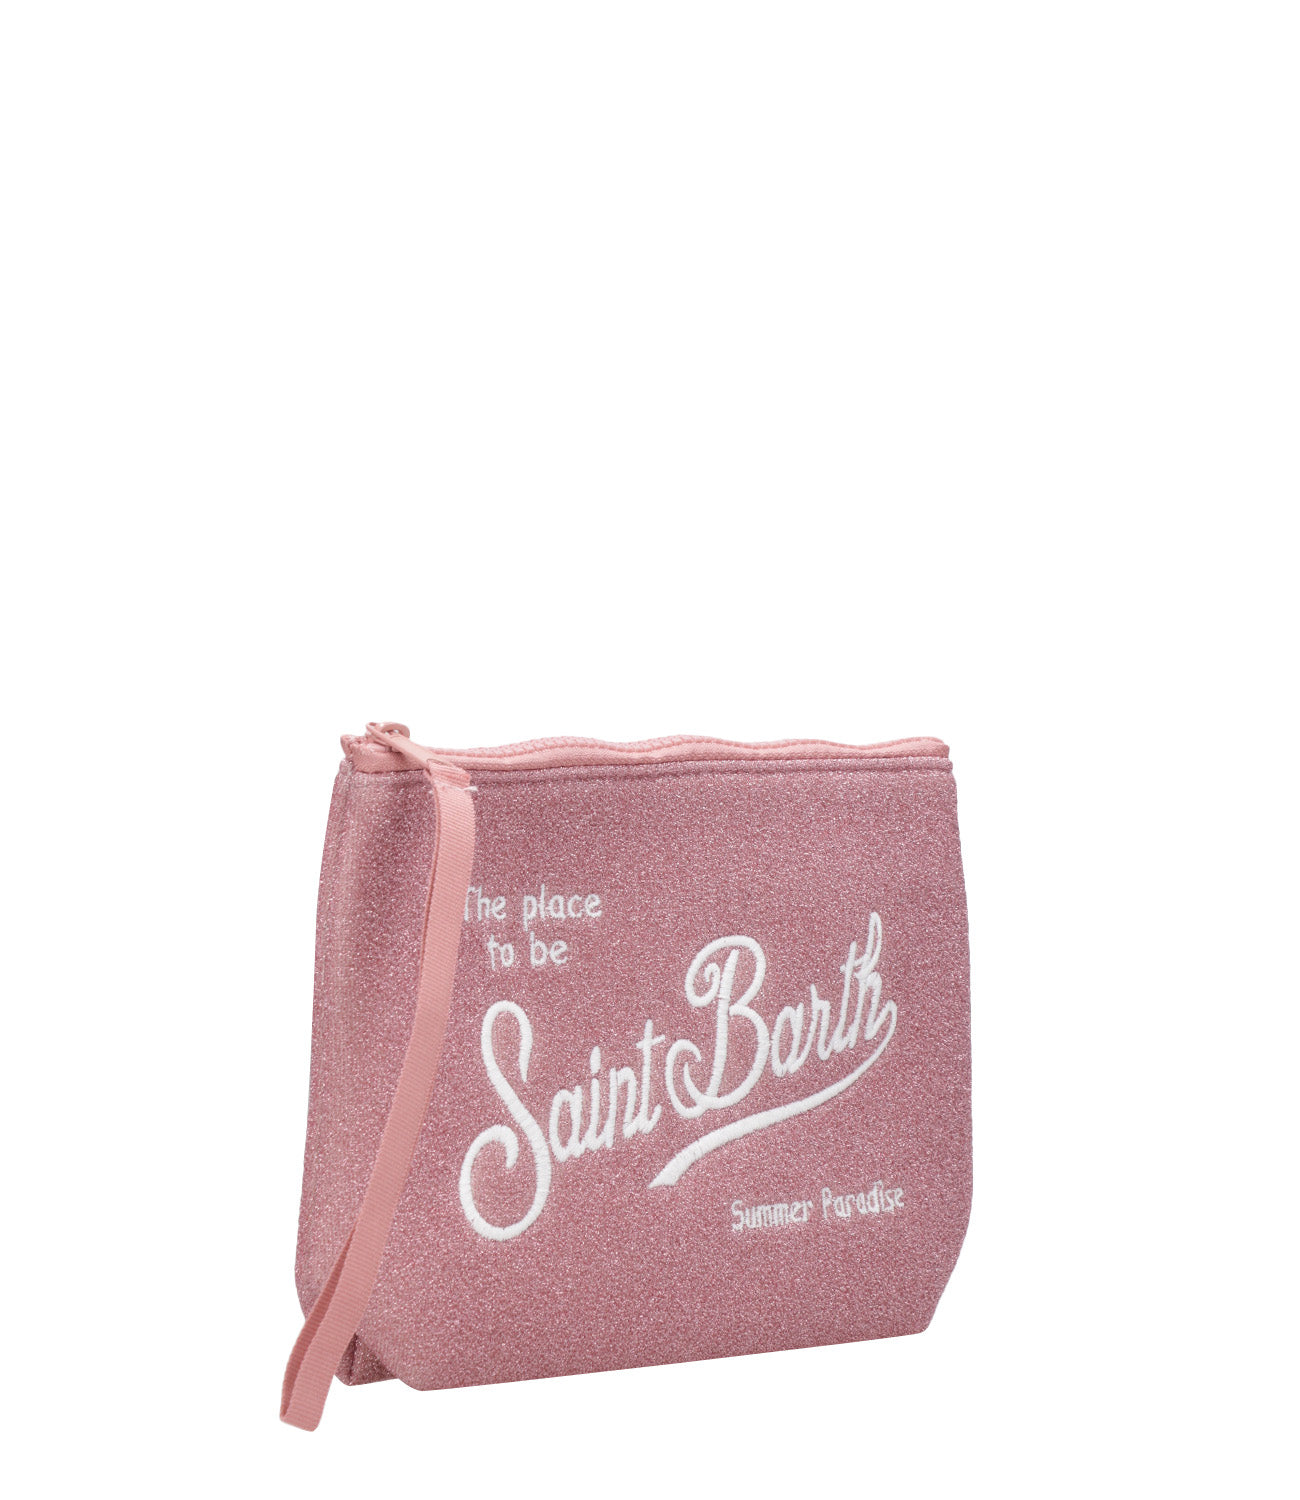 MC2 Saint Barth | Aline Pink Clutch Bag